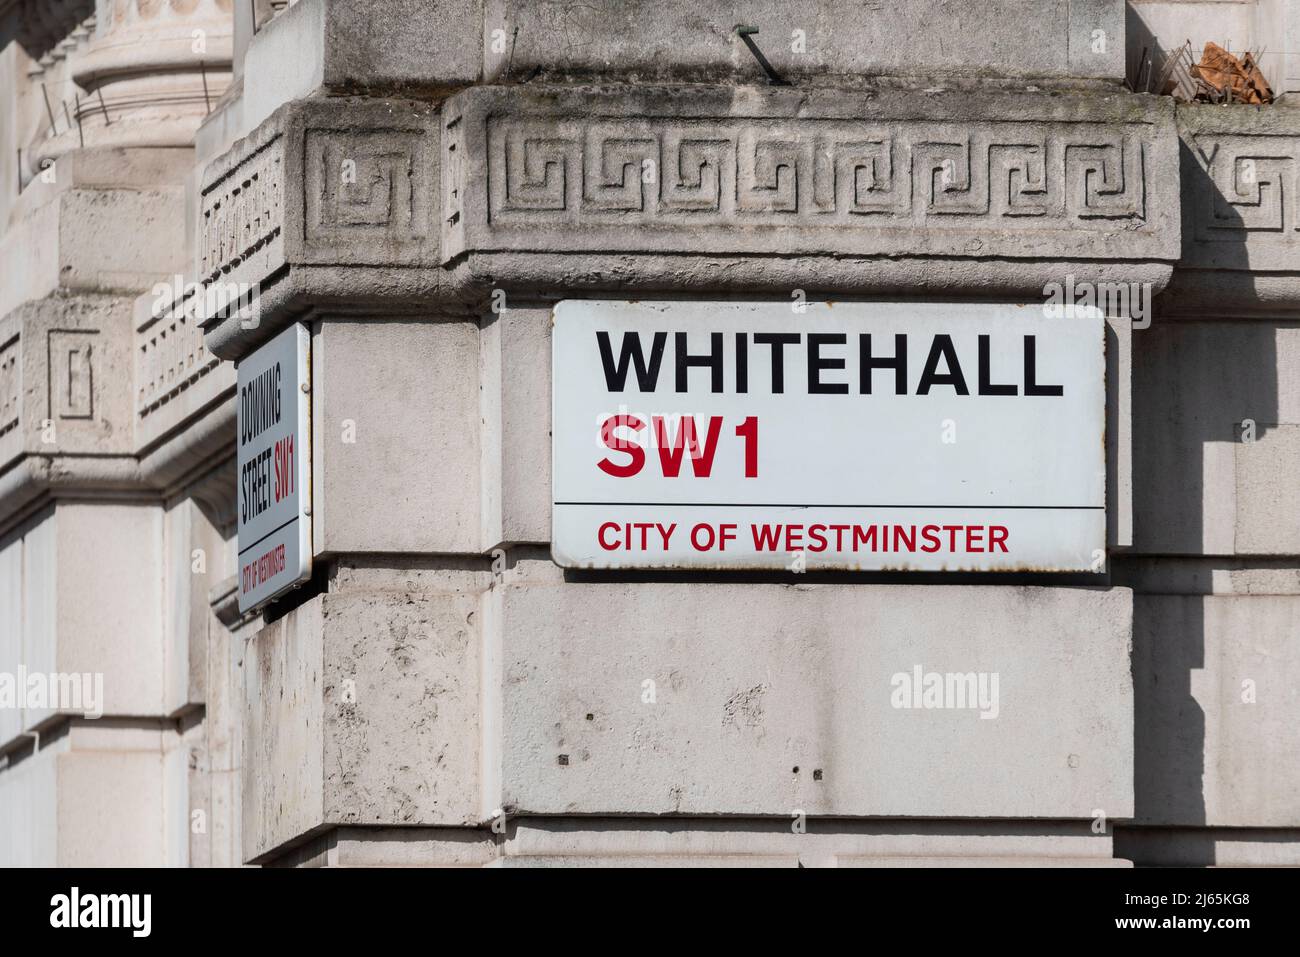 Whitehall SW1, junto a Downing Street, Westminster, Londres, Reino Unido. Señal de carretera. Esquina de la Oficina del Gabinete Foto de stock